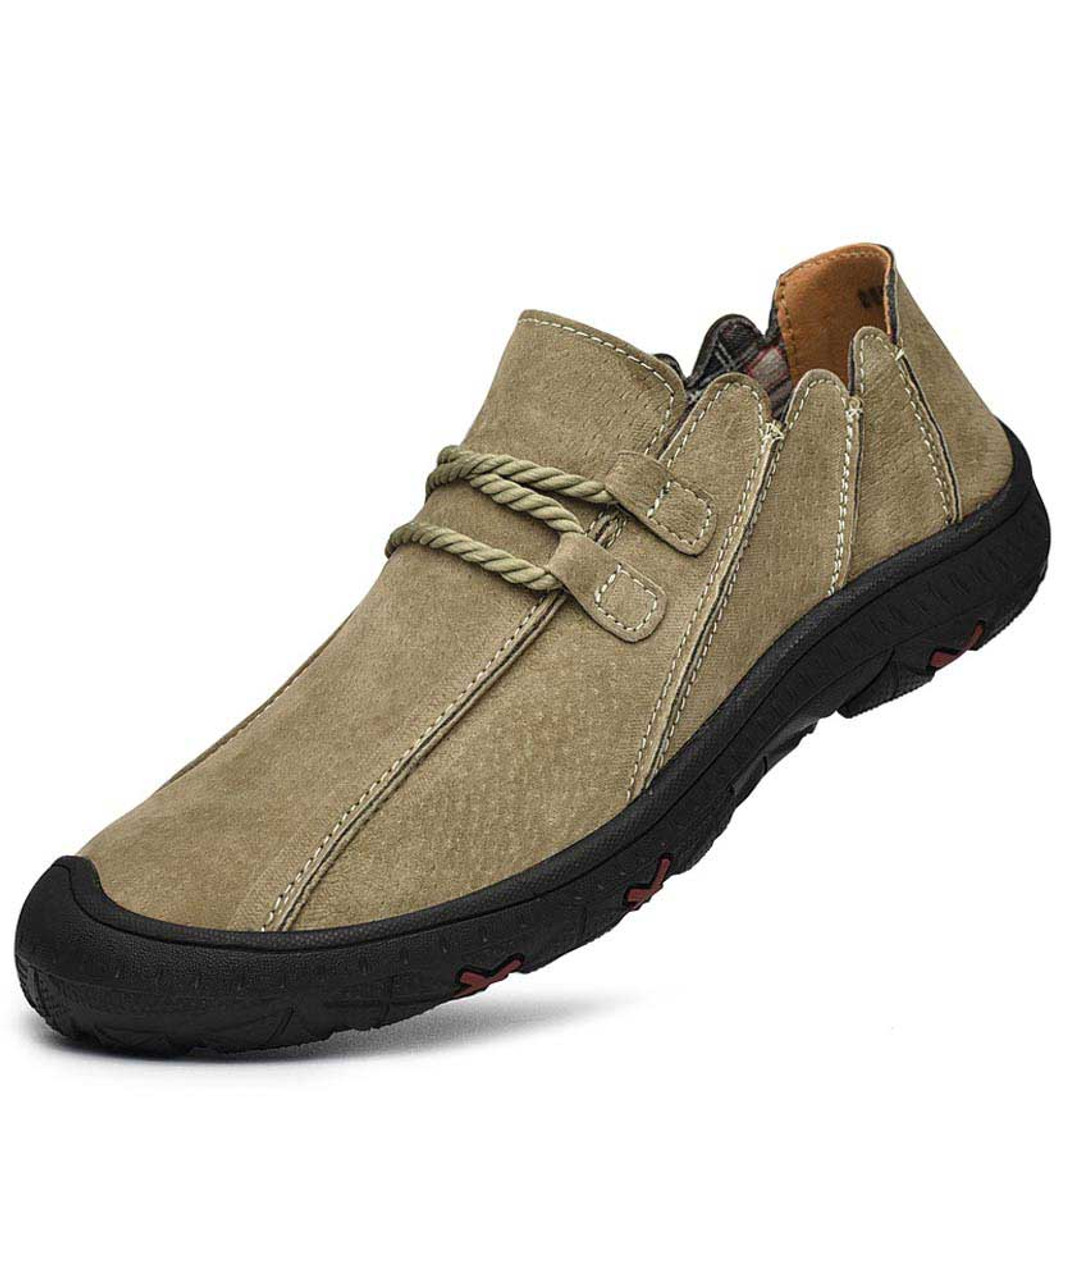 Khaki join sewed style casual shoe sneaker | Mens shoe sneakers online ...